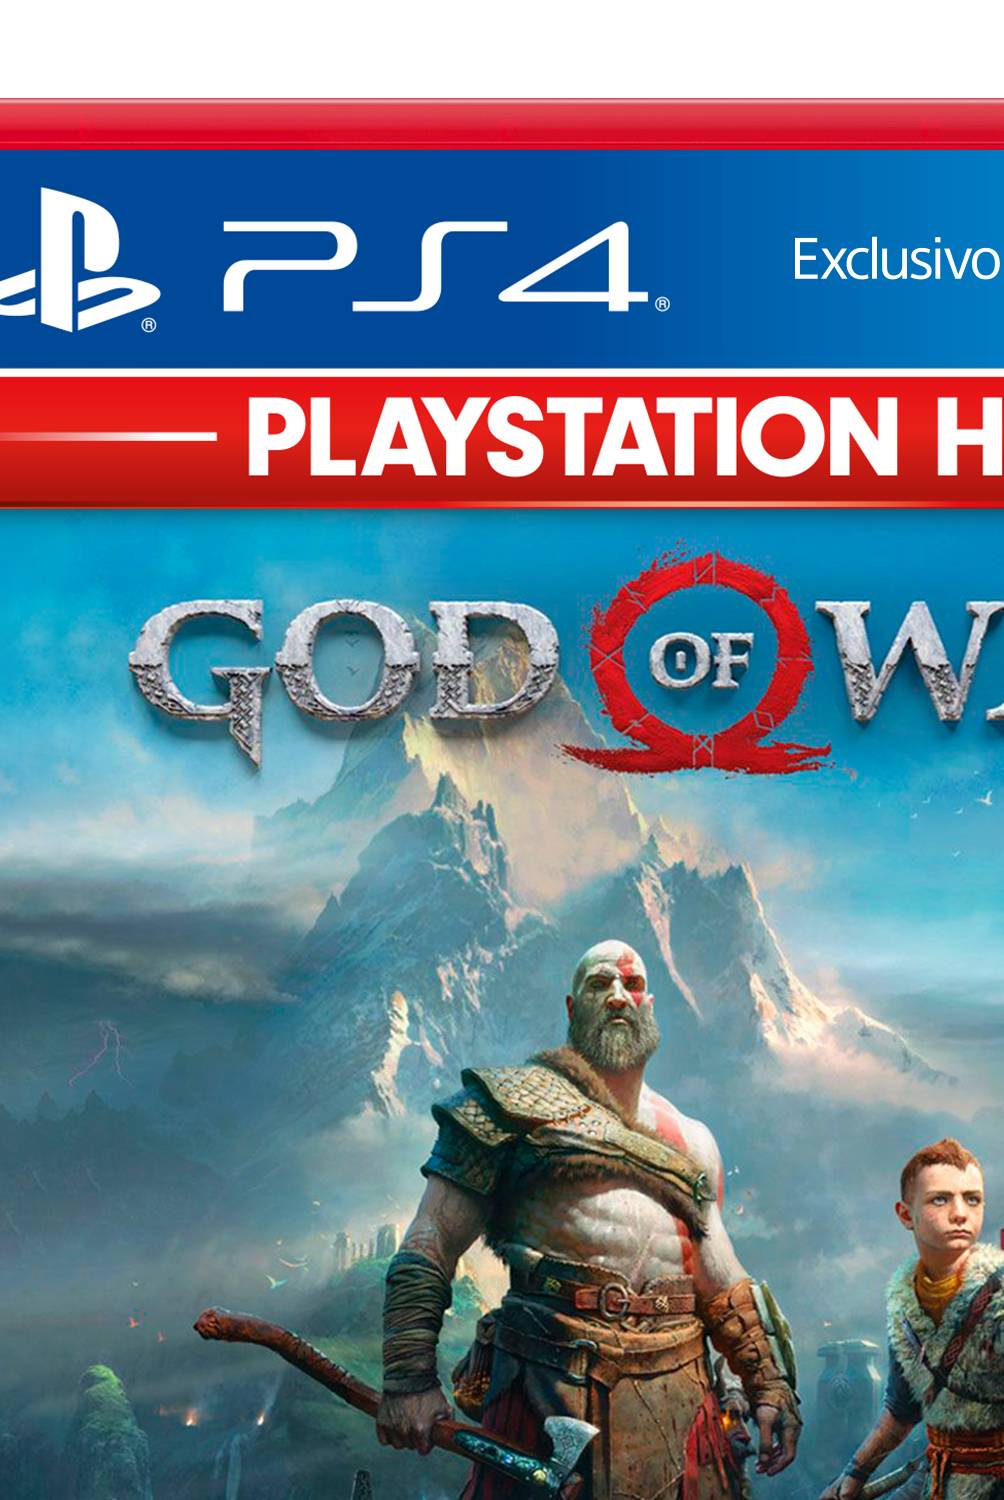 Videojuego PS4 God of War